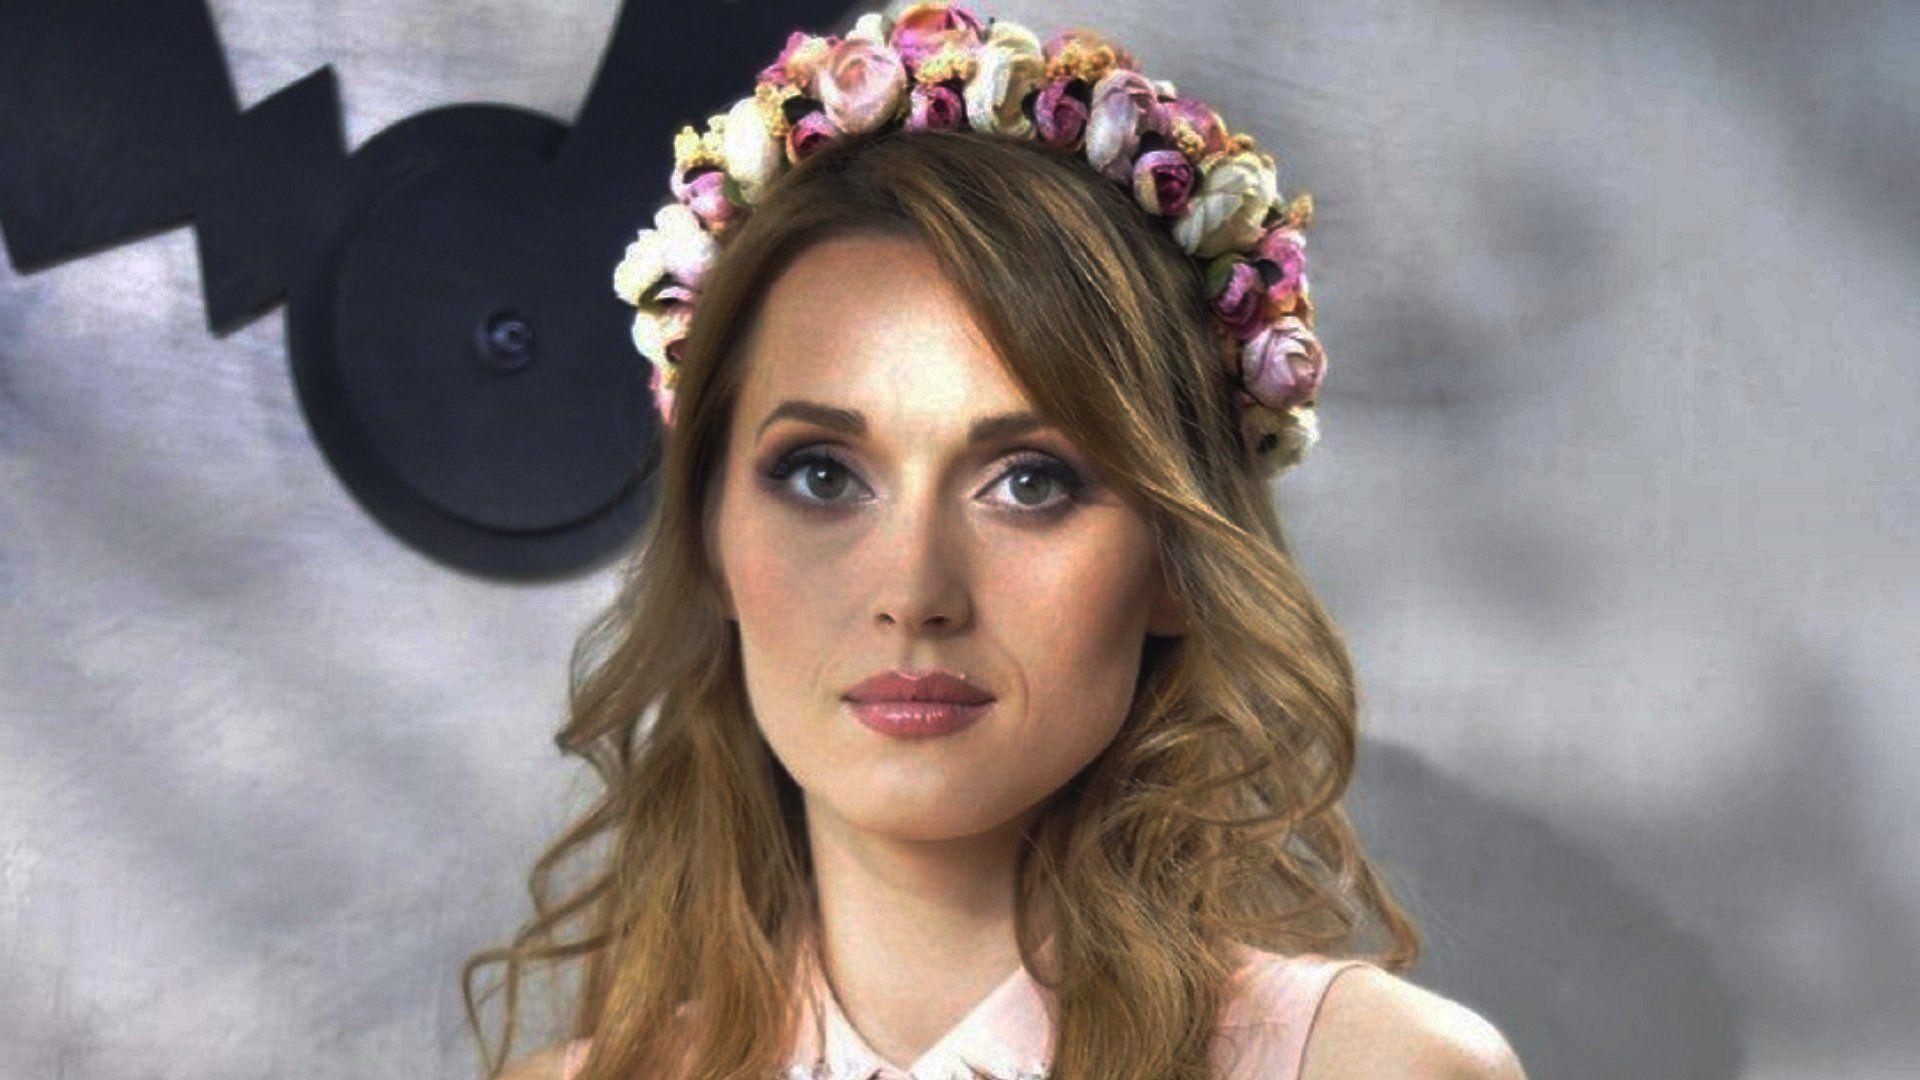 Ukrainian singer Aida Nikolaychuk beauty woman blonde wallpaper